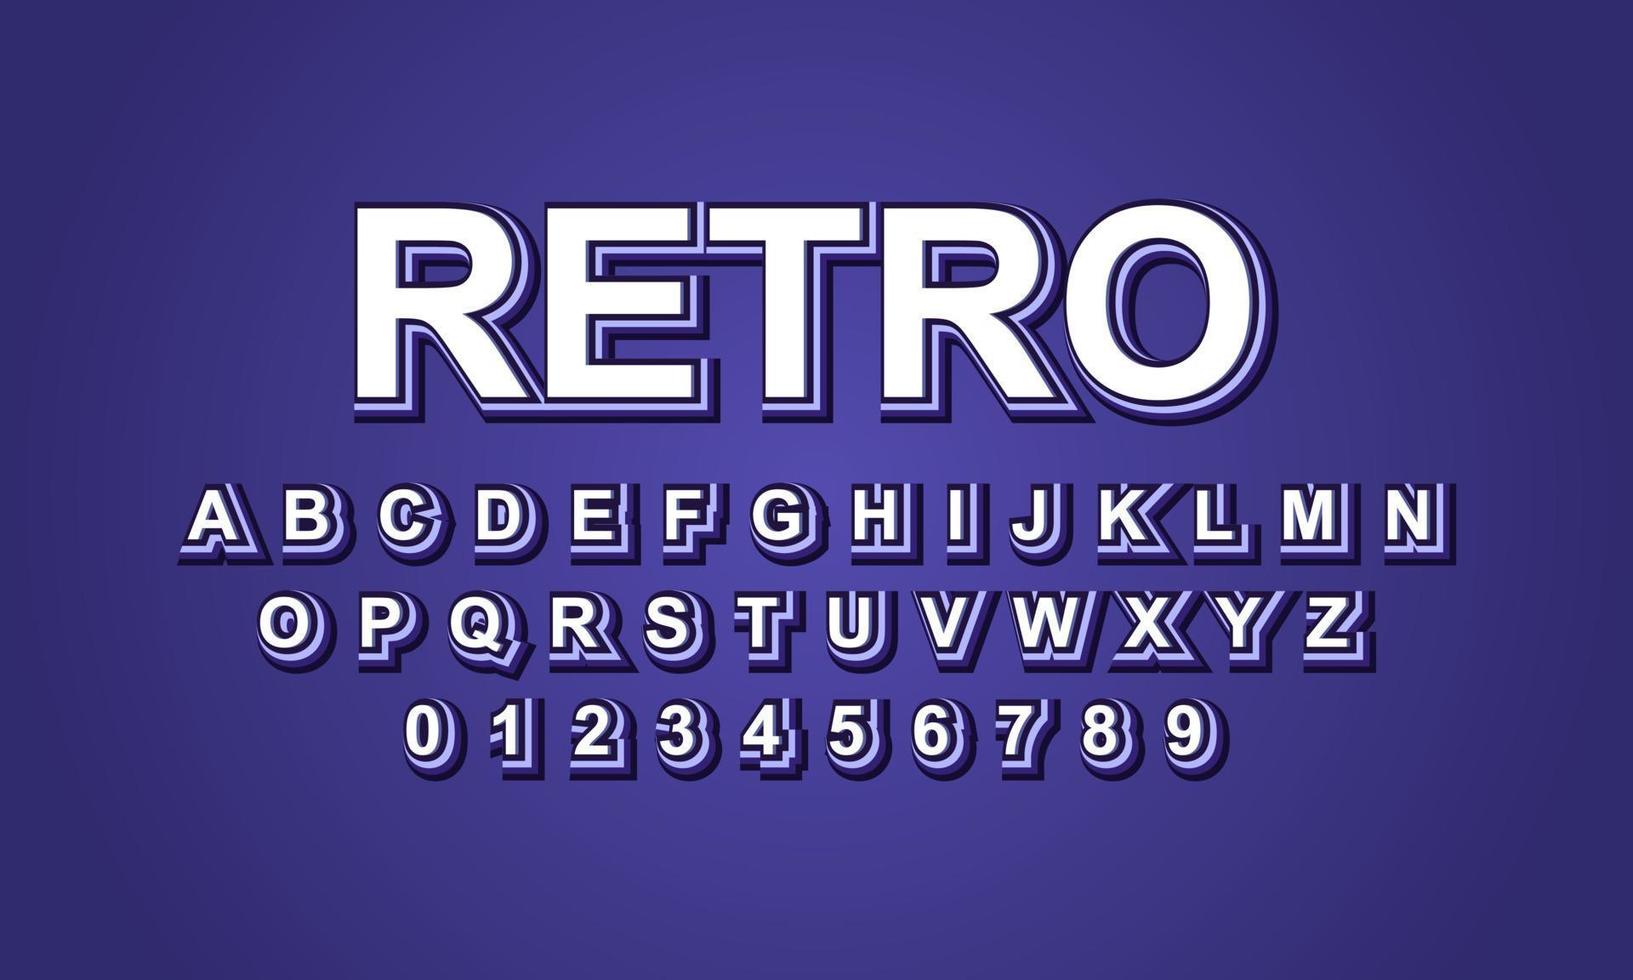 retro style editable text effect vector